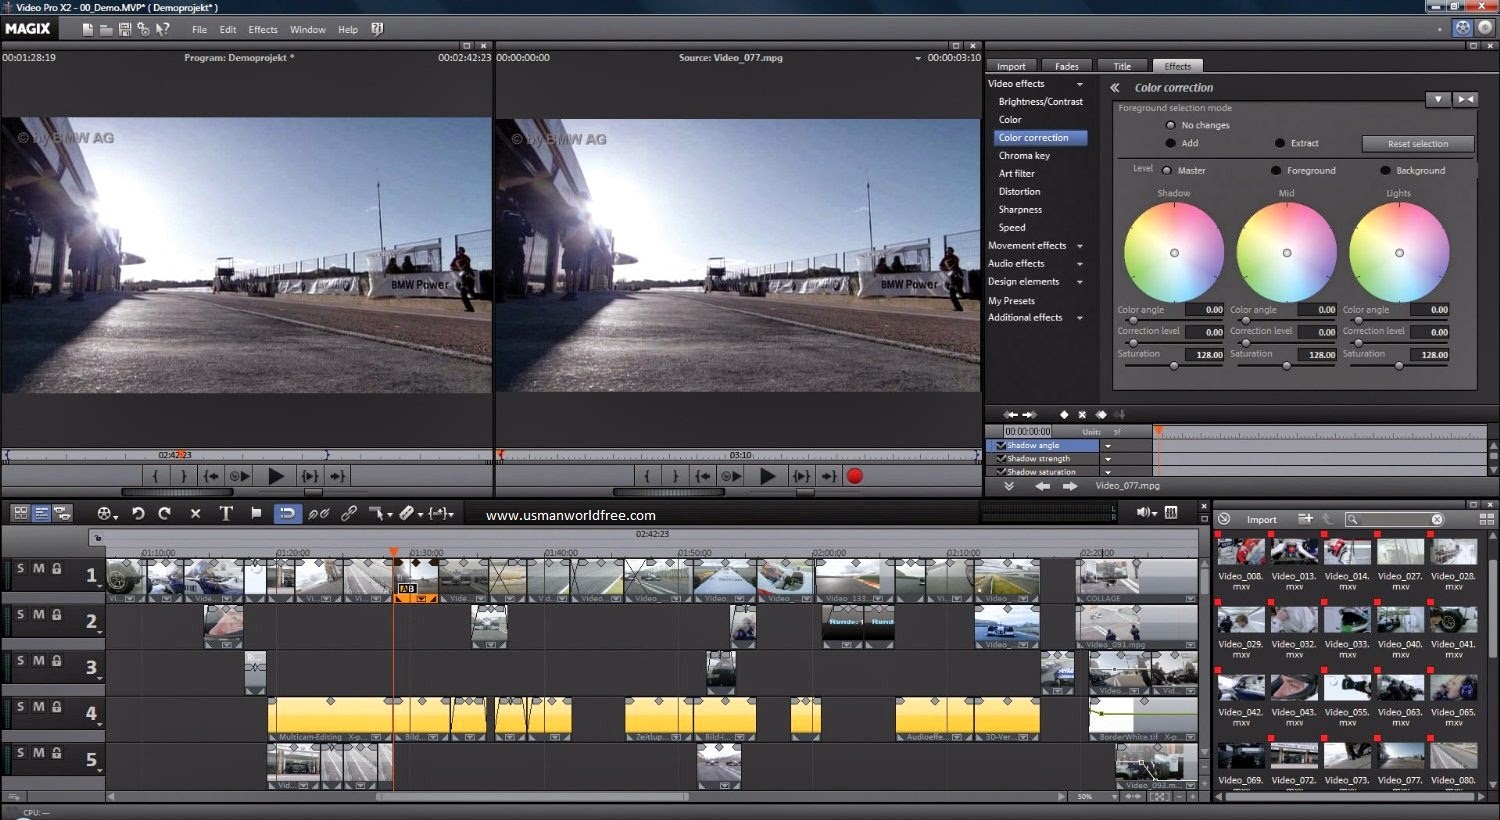 magix video editor software free download